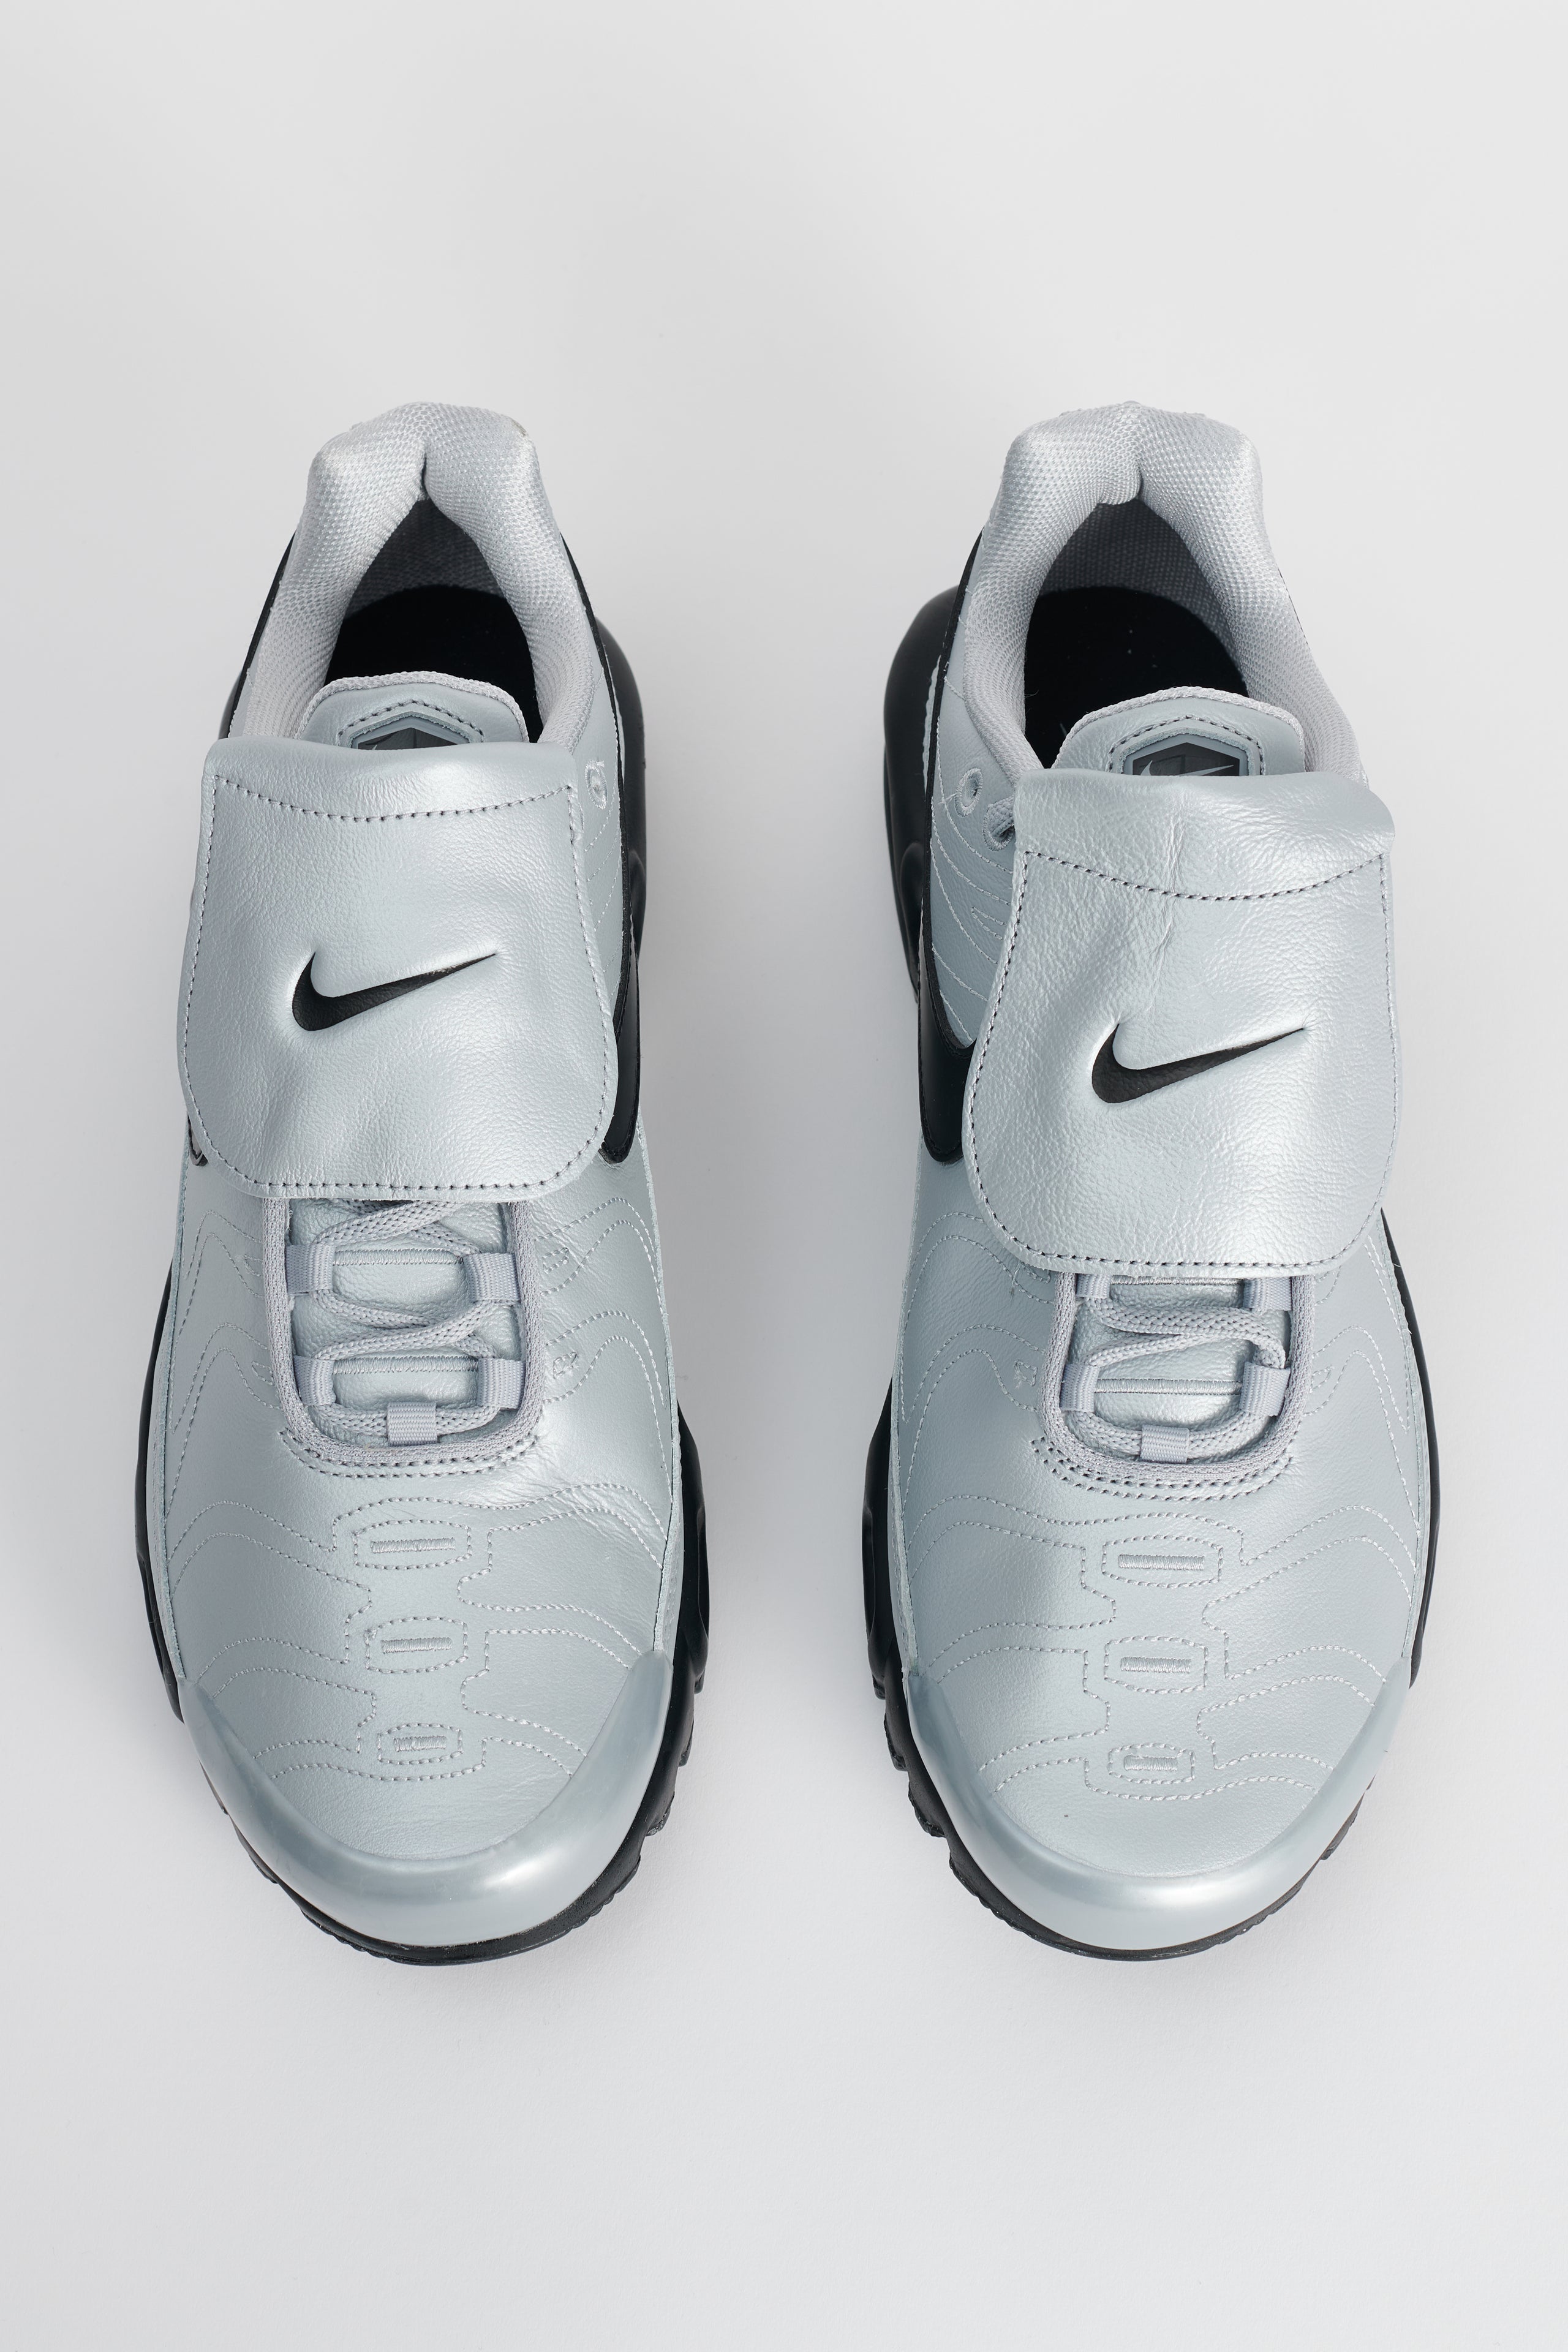 Nike Air Max Plus TNPO Wolf Grey / Black